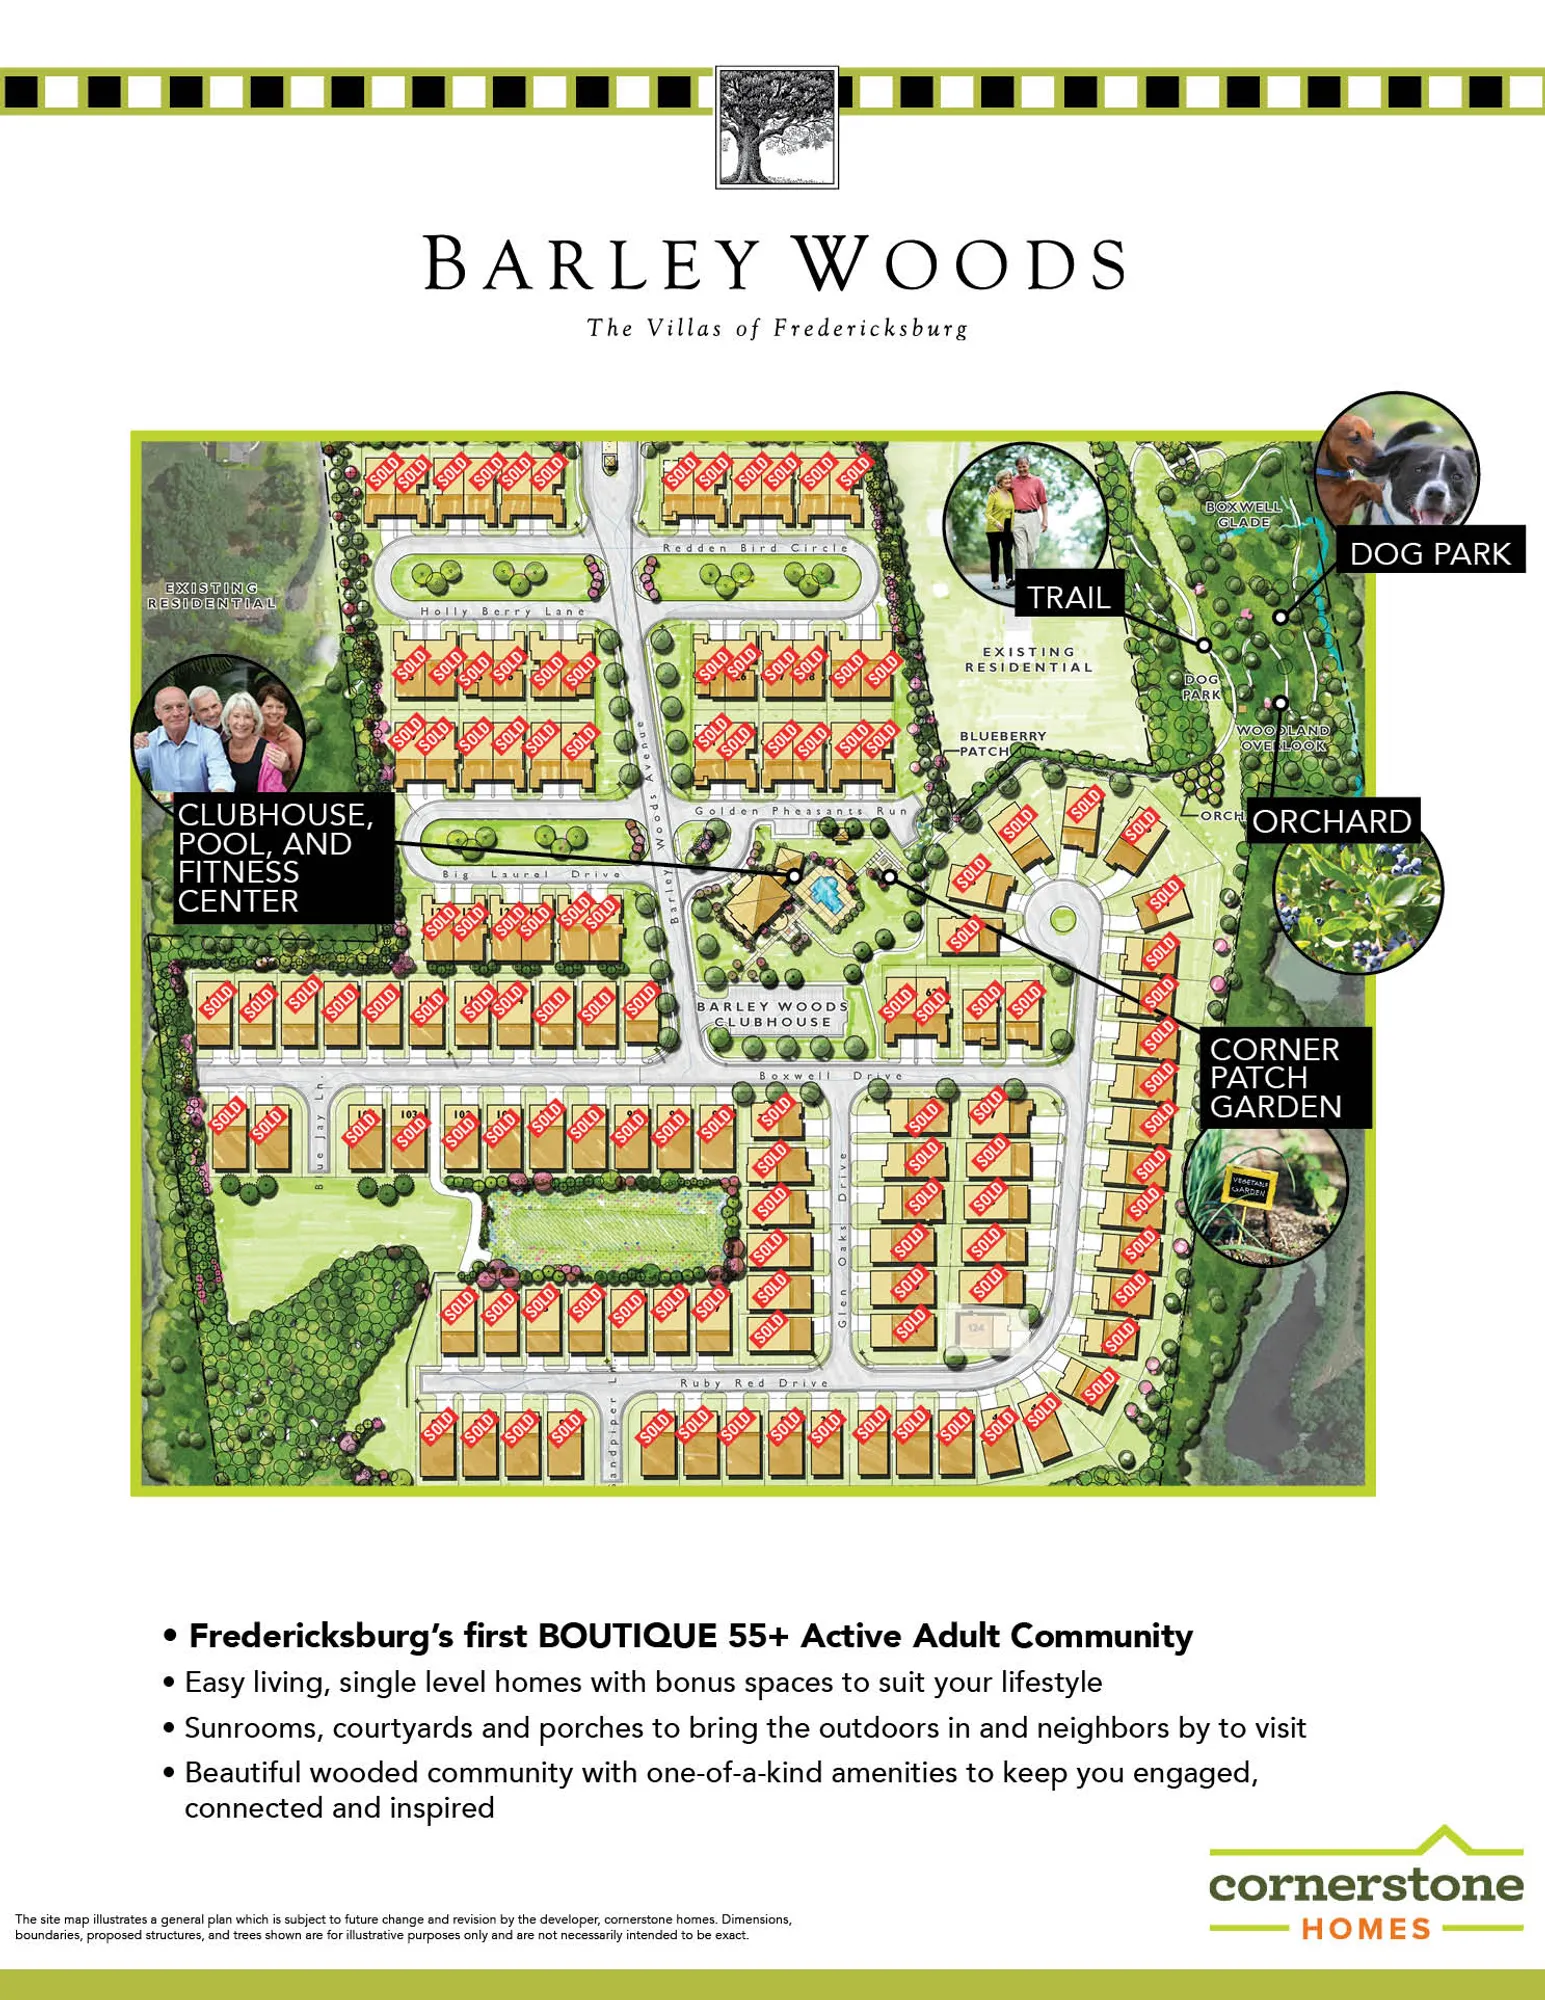 Barley Woods - The Villas of Fredericksburg